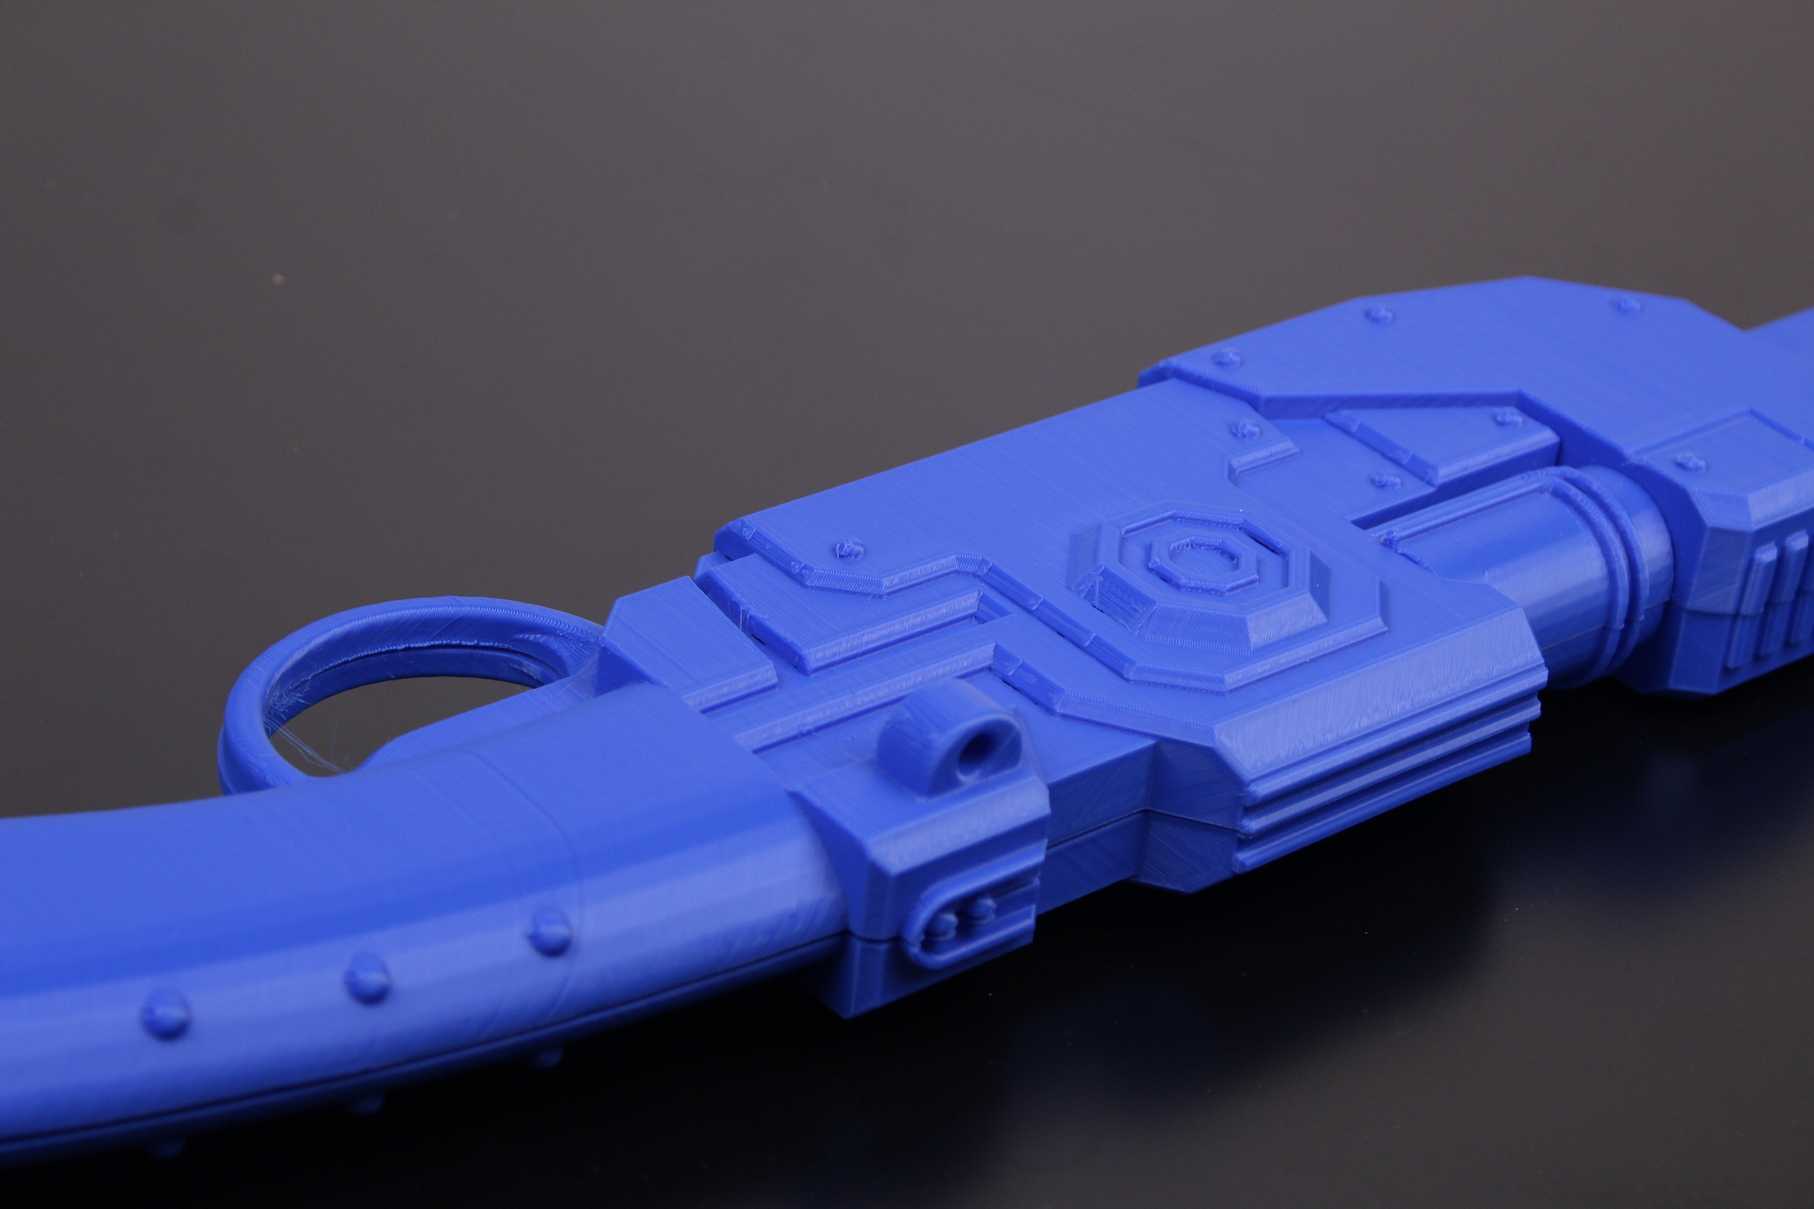 Mandalorian Rifle printed on the CR 30 3DPrintMill 1 | Creality 3DPrintMill (CR-30) Review: Belt Printer for Batch 3D Printing